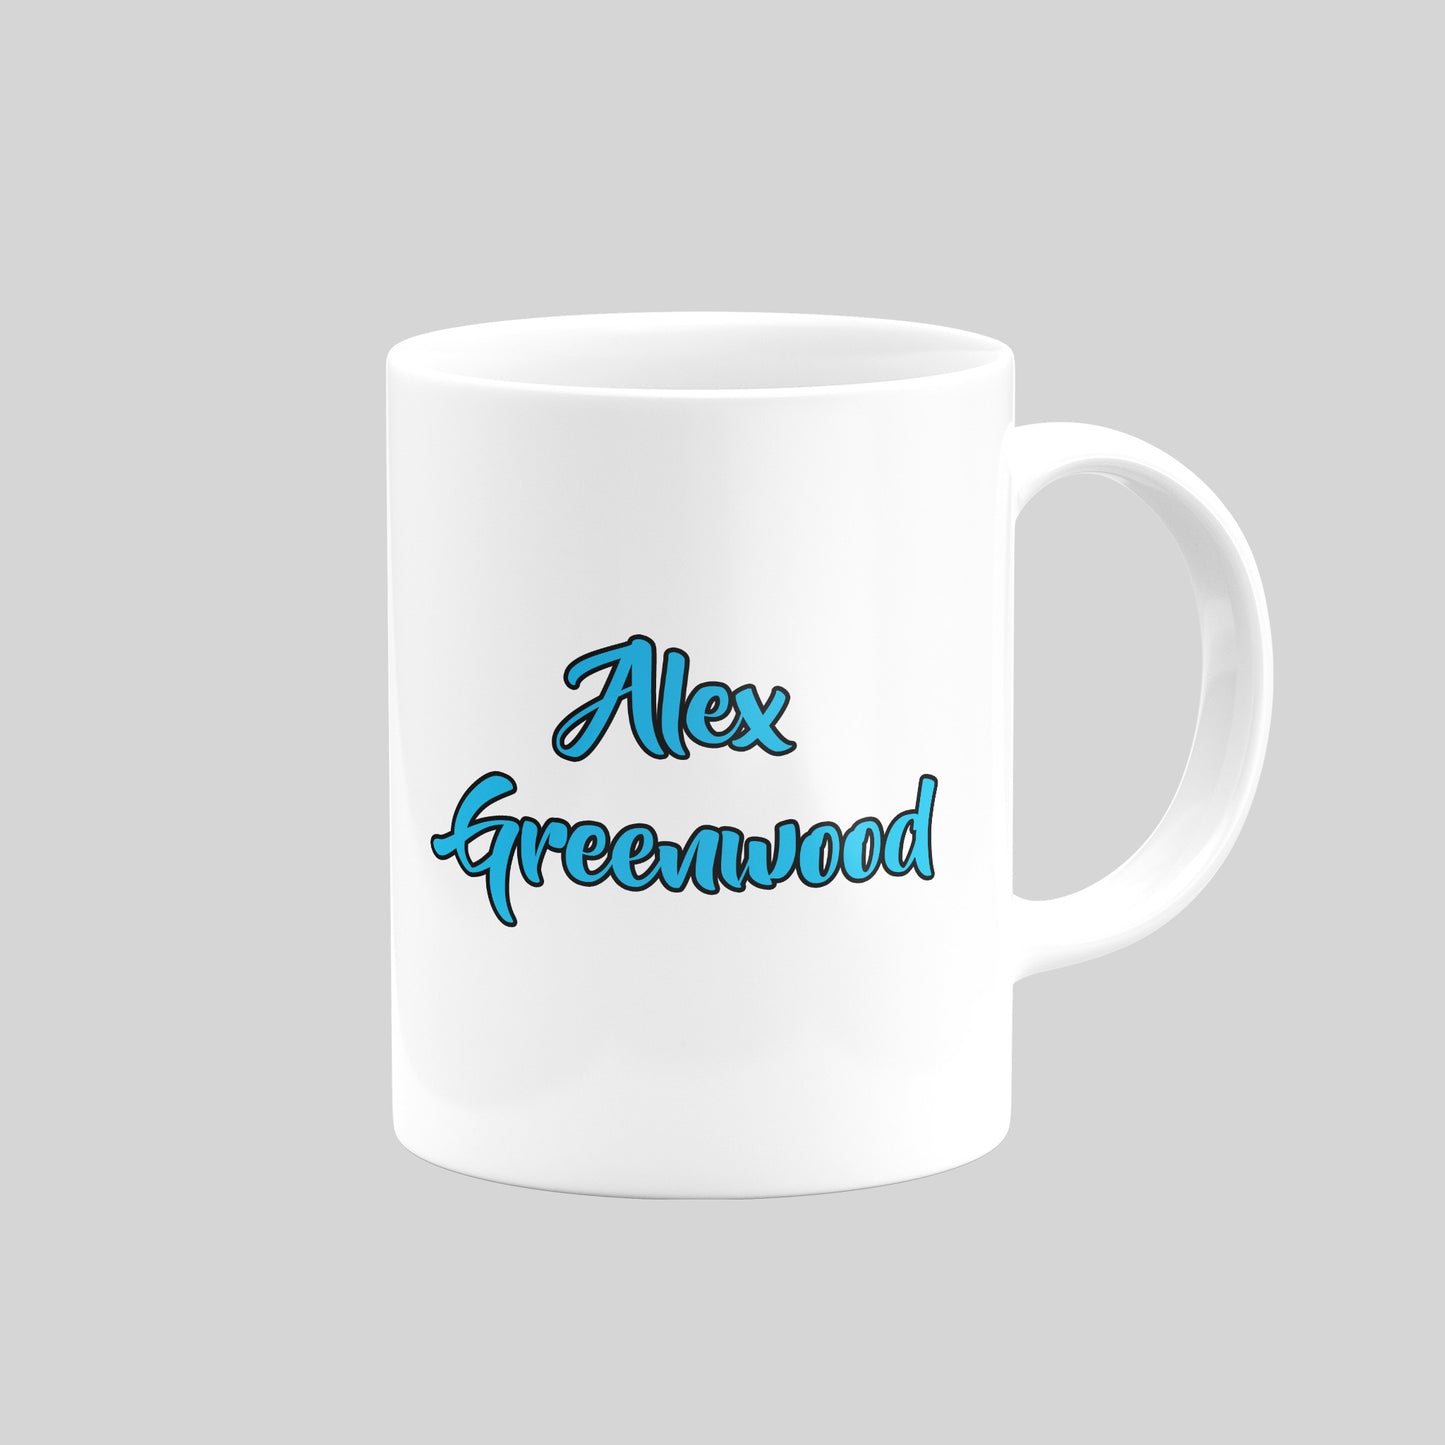 Alex Greenwood Man City Mug